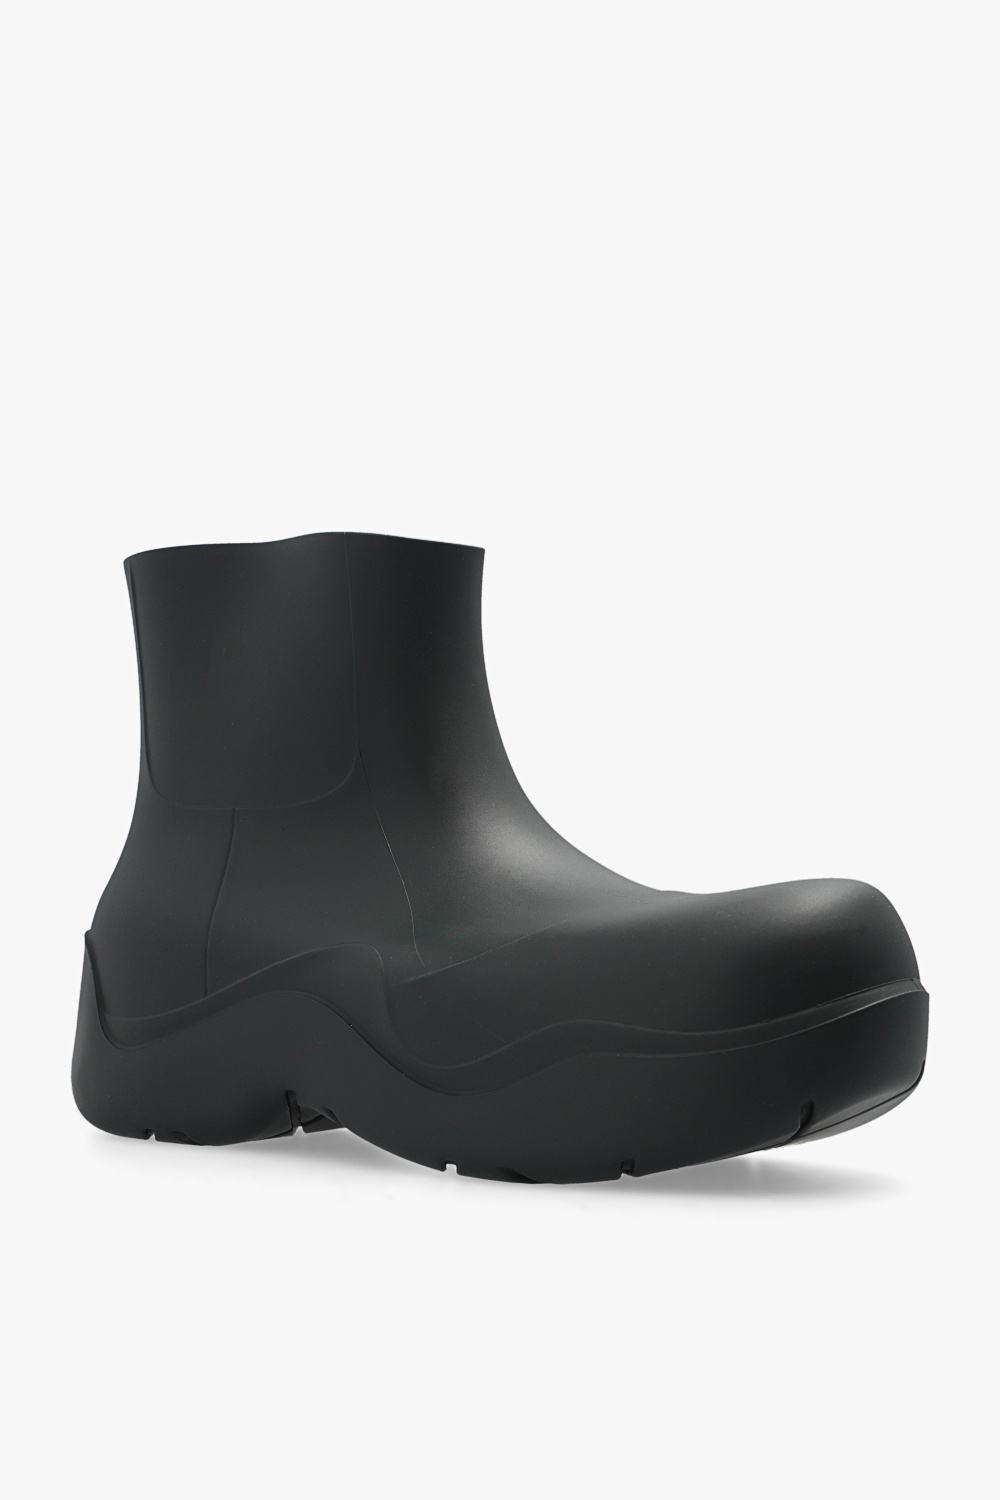 bottega short Veneta ‘Puddle’ short rain boots